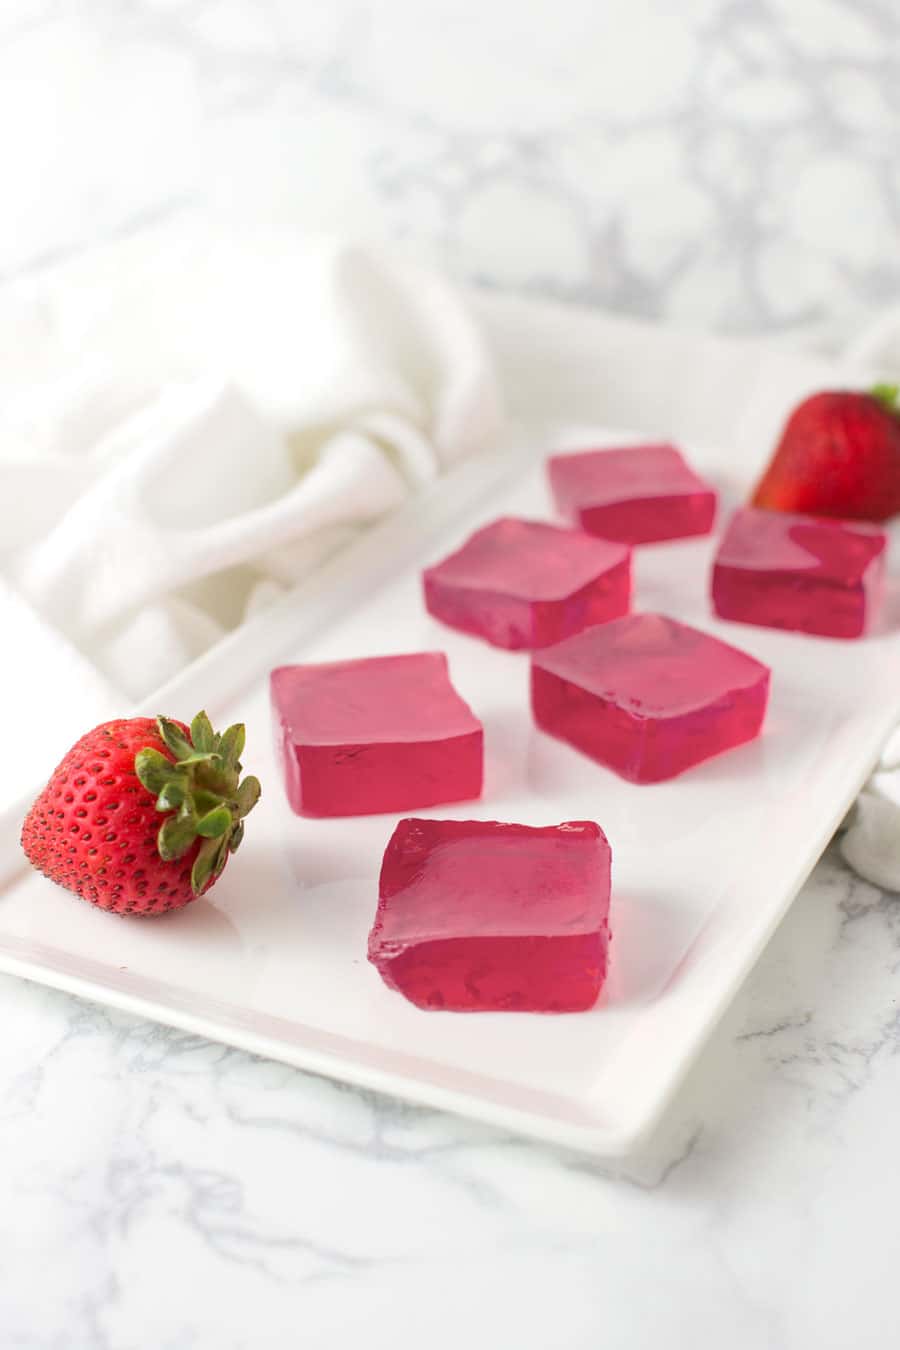 Strawberry-Hibiscus Gelatin Snacks recipe from acleanplate.com #paleo #aip #autoimmuneprotocol